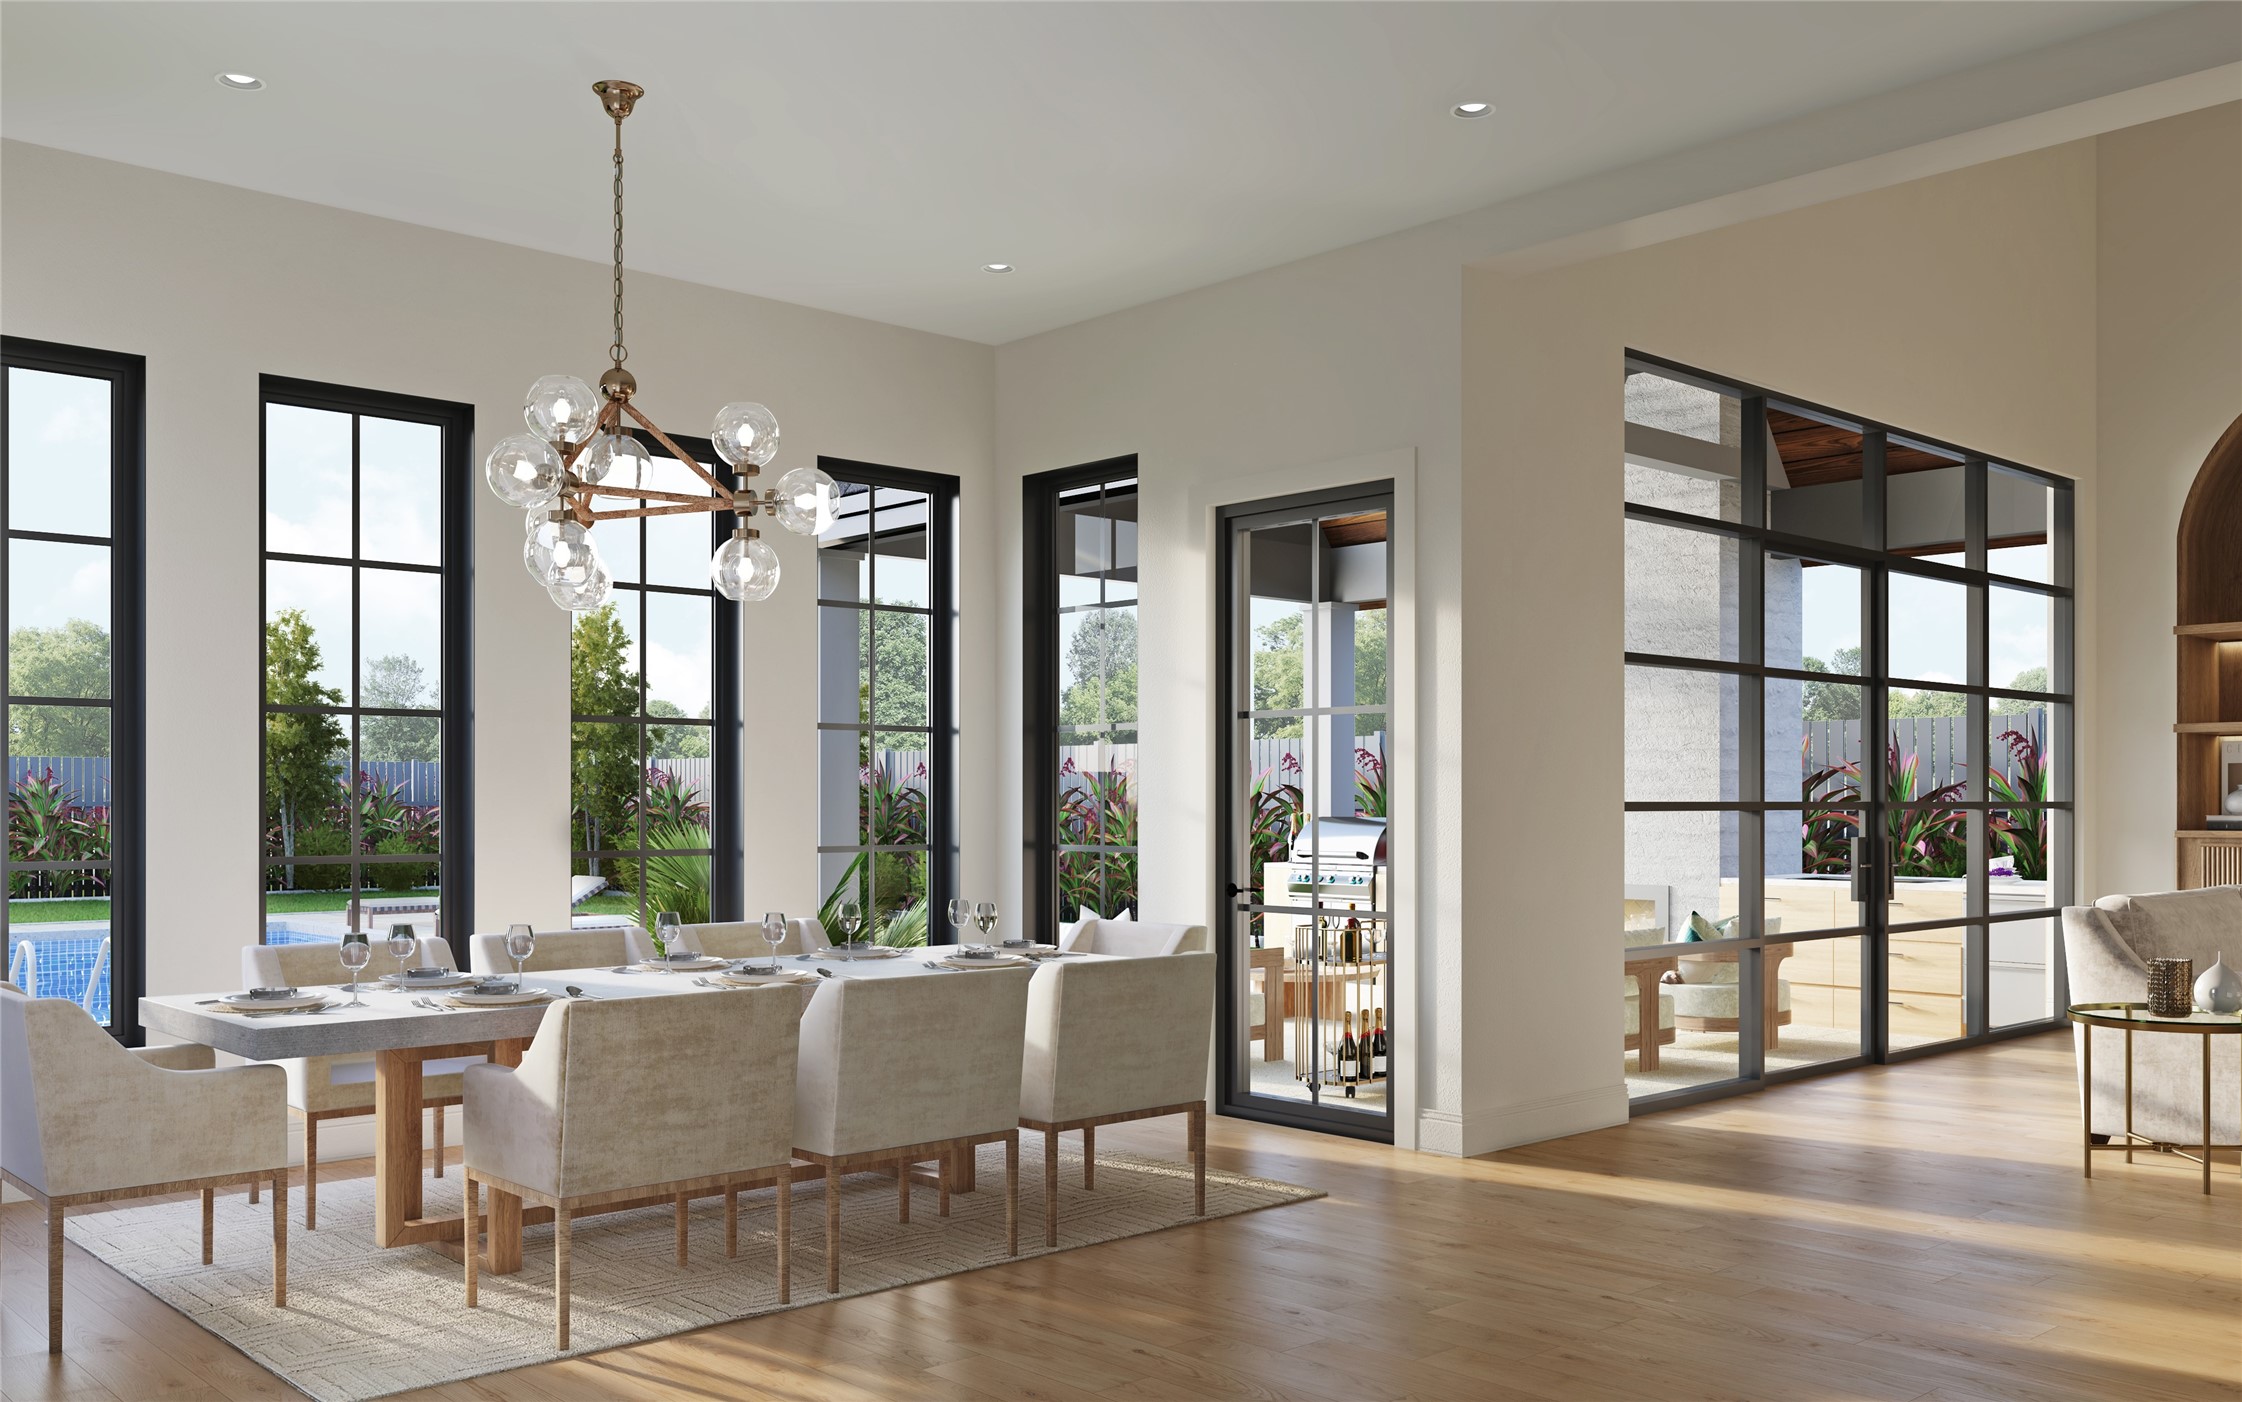 Your breakfast area featuring floor to ceiling Pella windows overlooking your stunning backyard grounds.